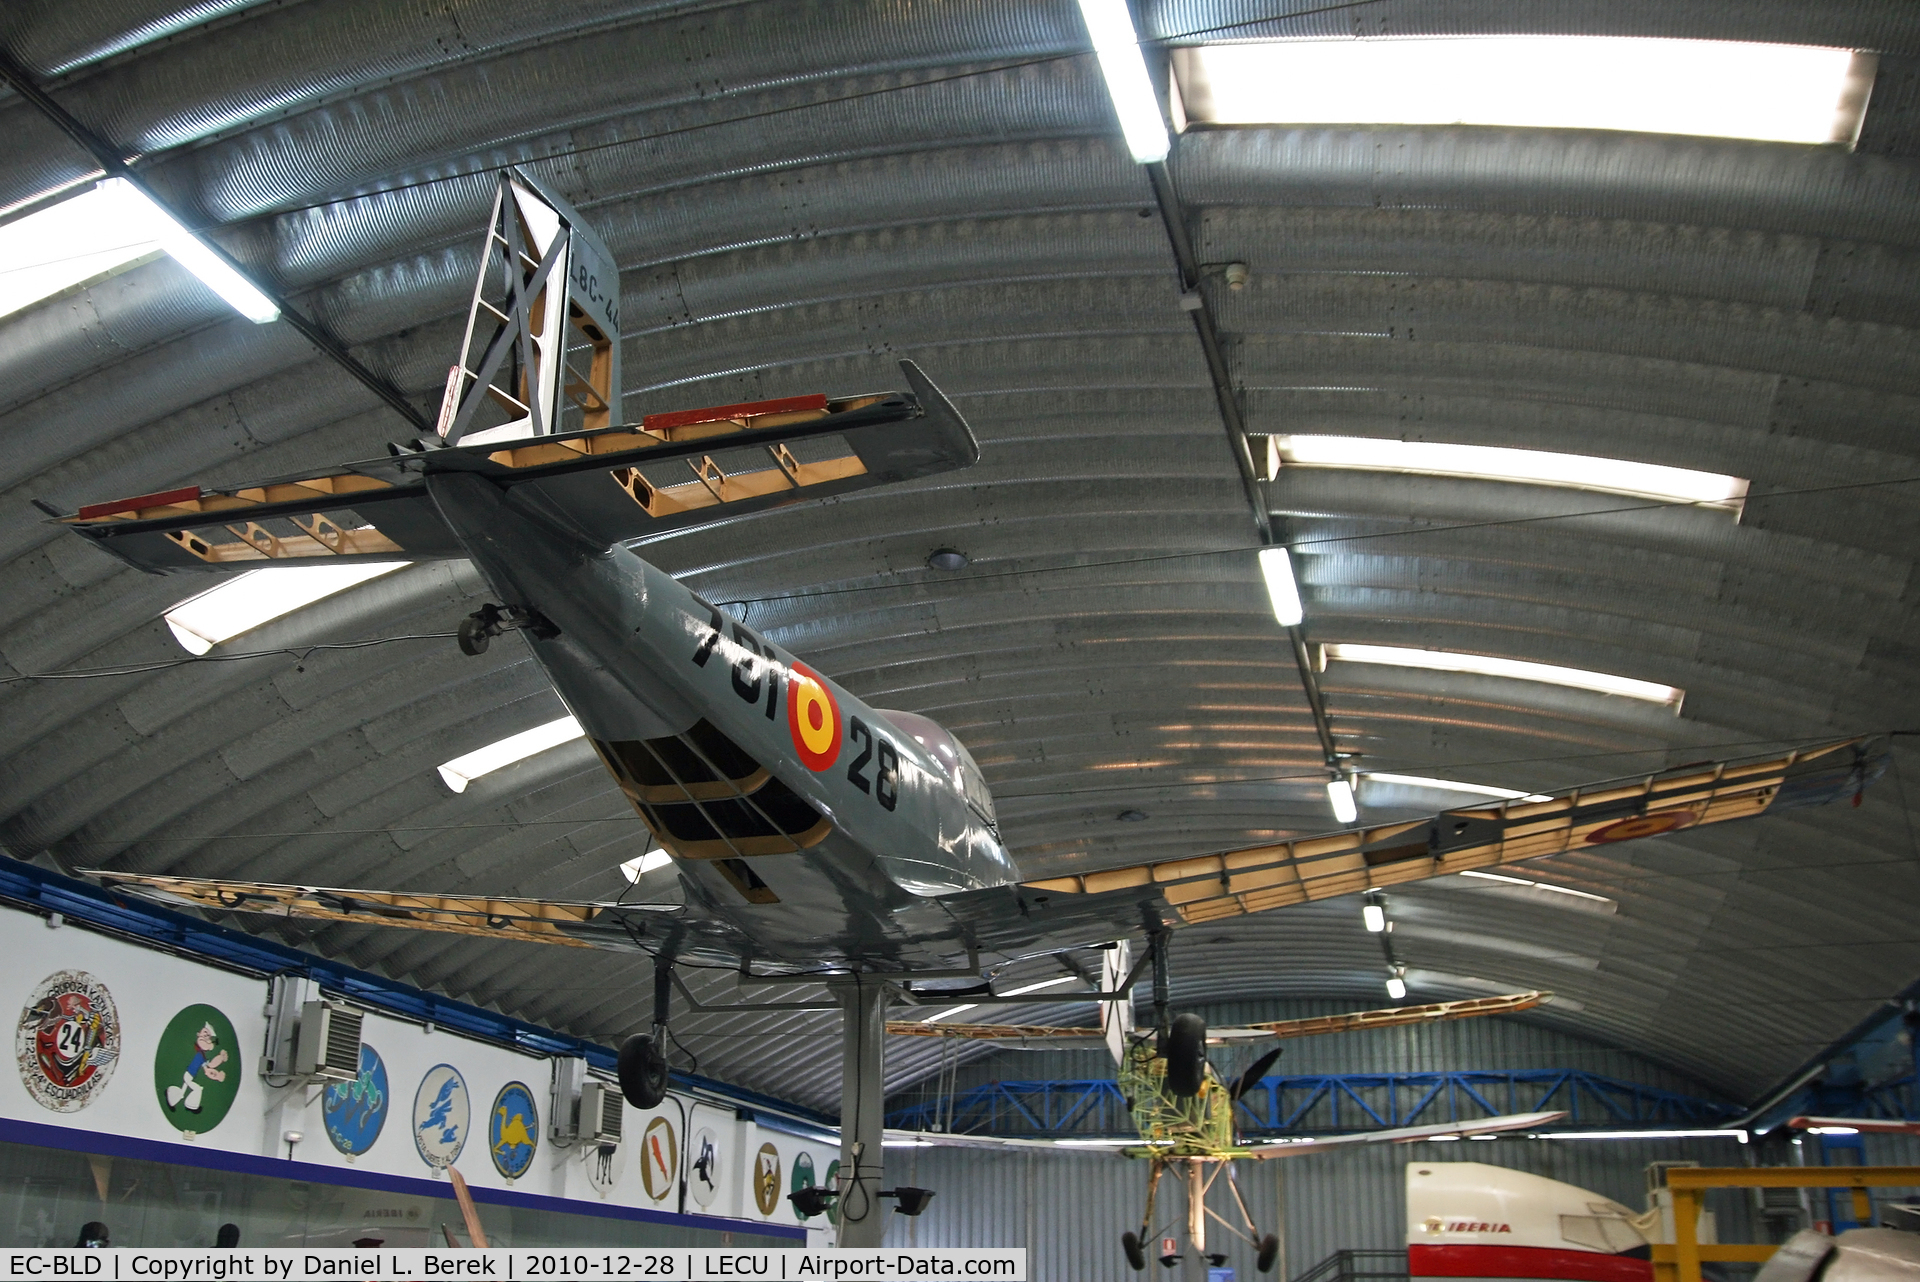 EC-BLD, AISA I-11B Peque C/N 159, Intresting display at the Museo del Aire